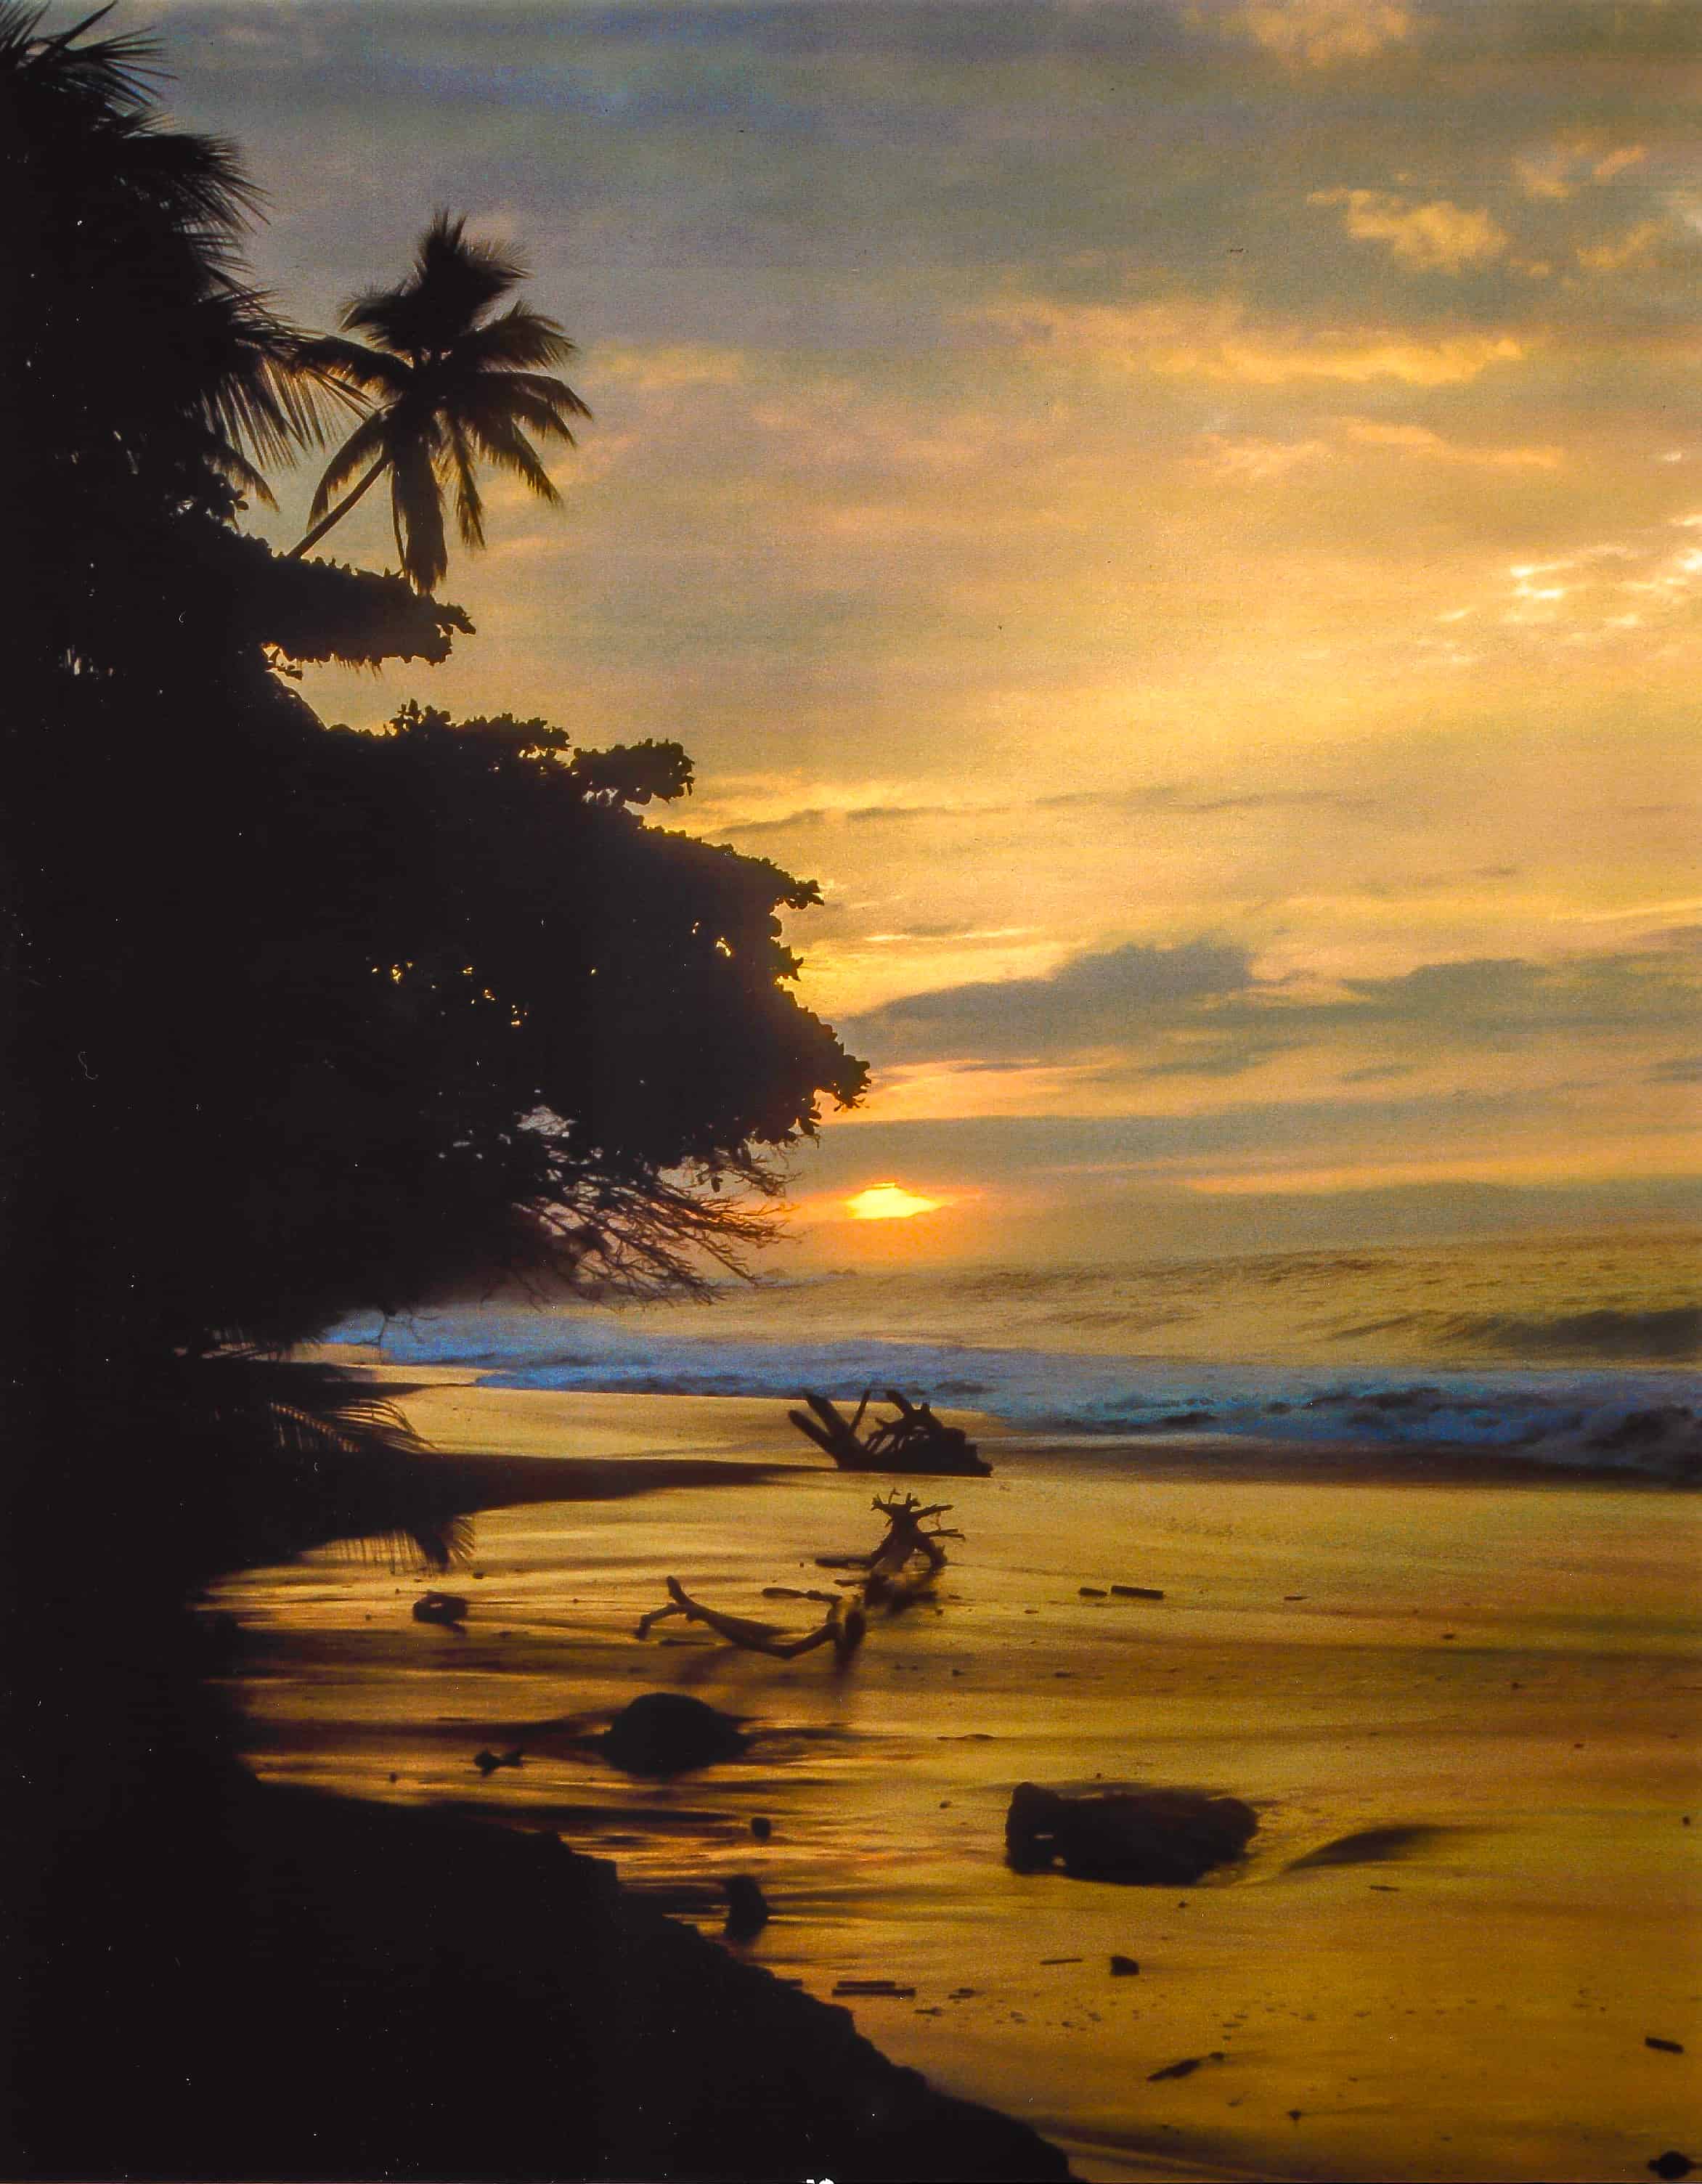 Sunset on the Beach in Playa Tambor, Costa Rica